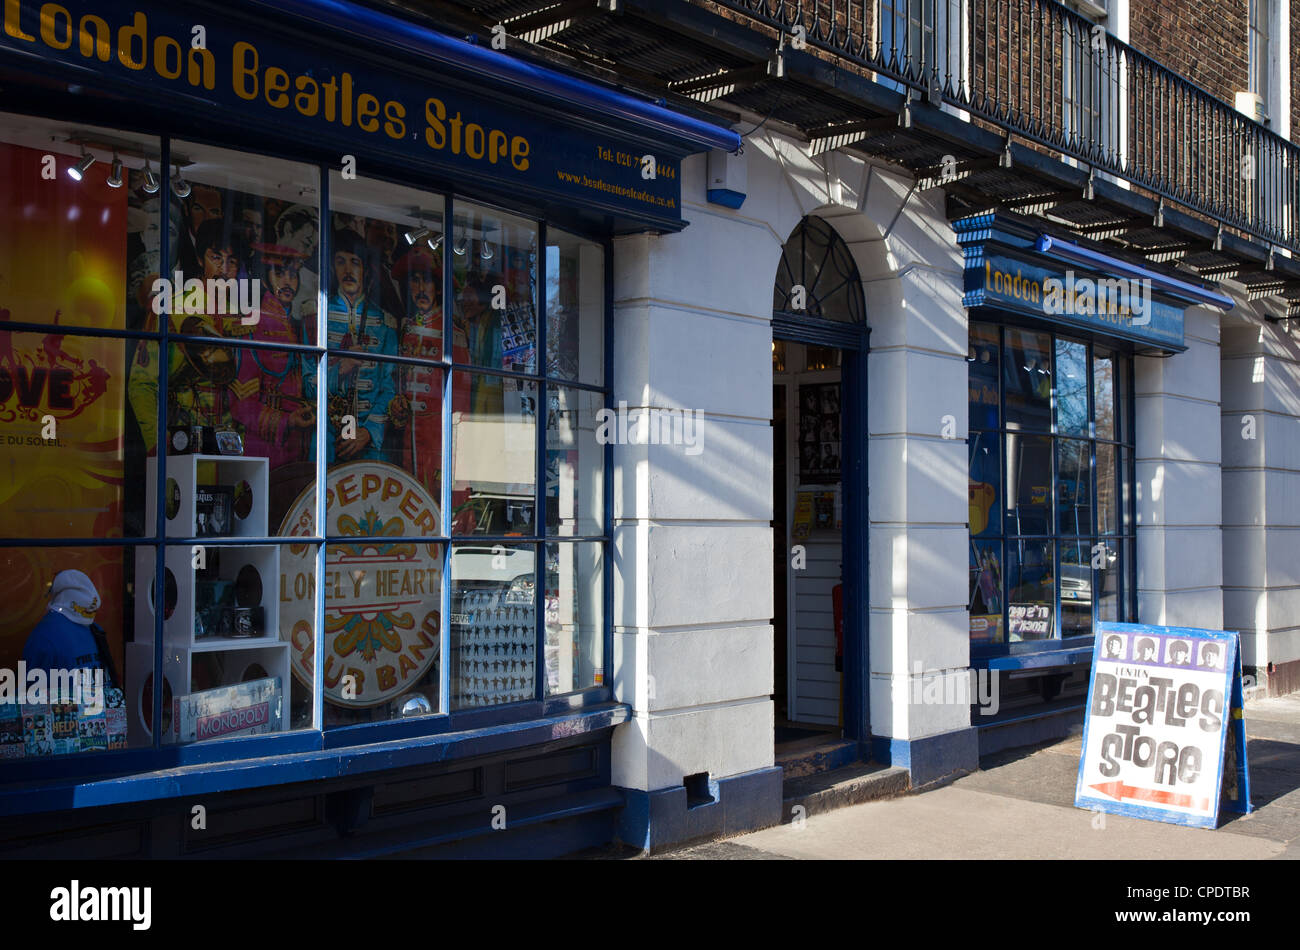 London, the Beatles store in Baker street Stock Photo